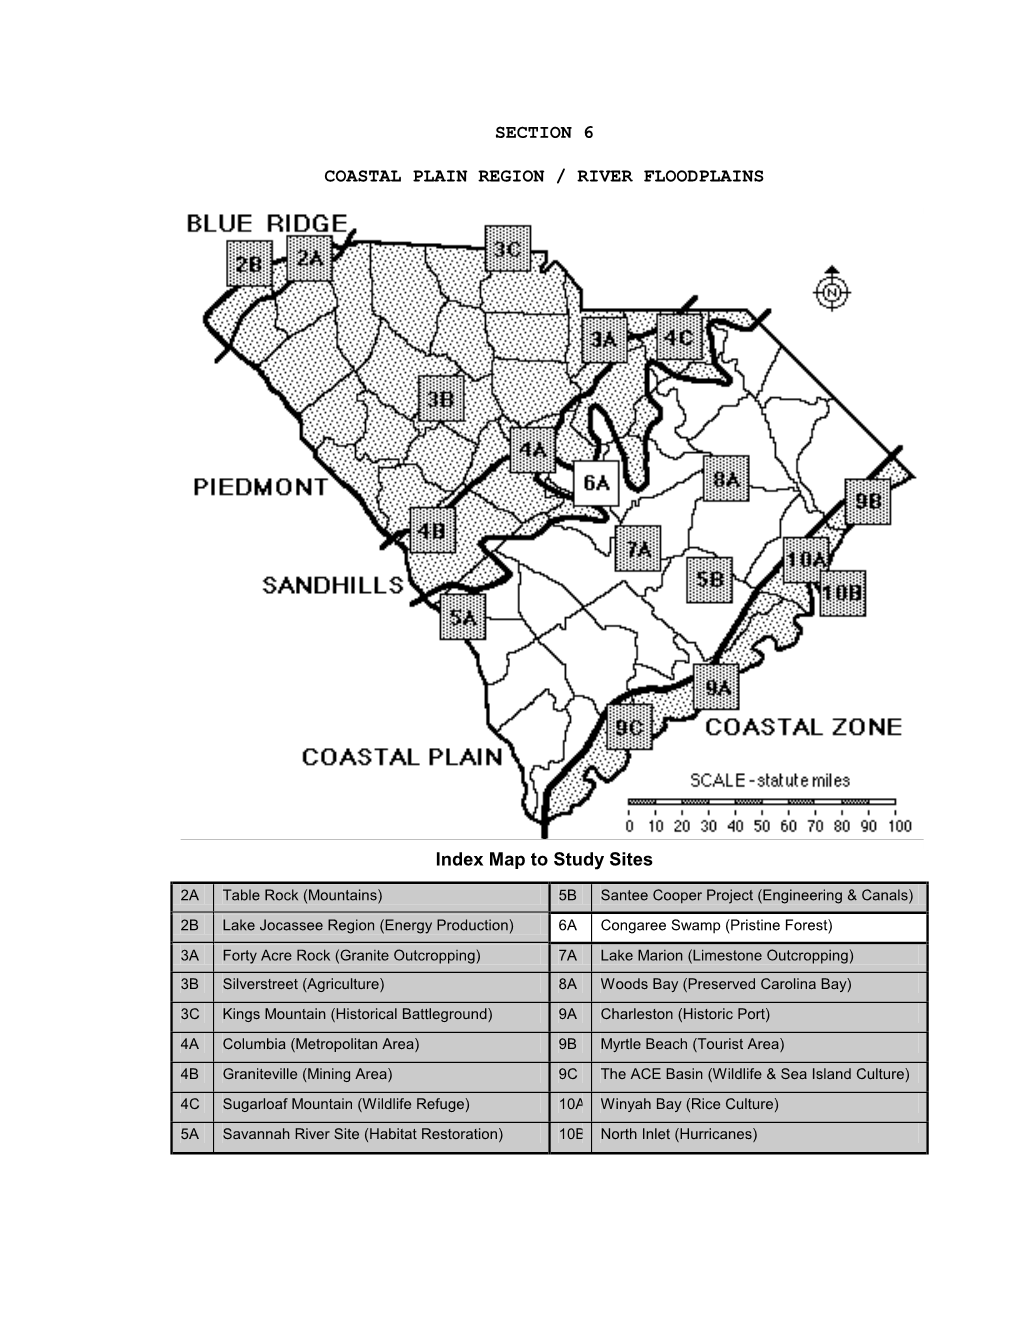 Section 6: Coastal Plain Region / River Floodplains